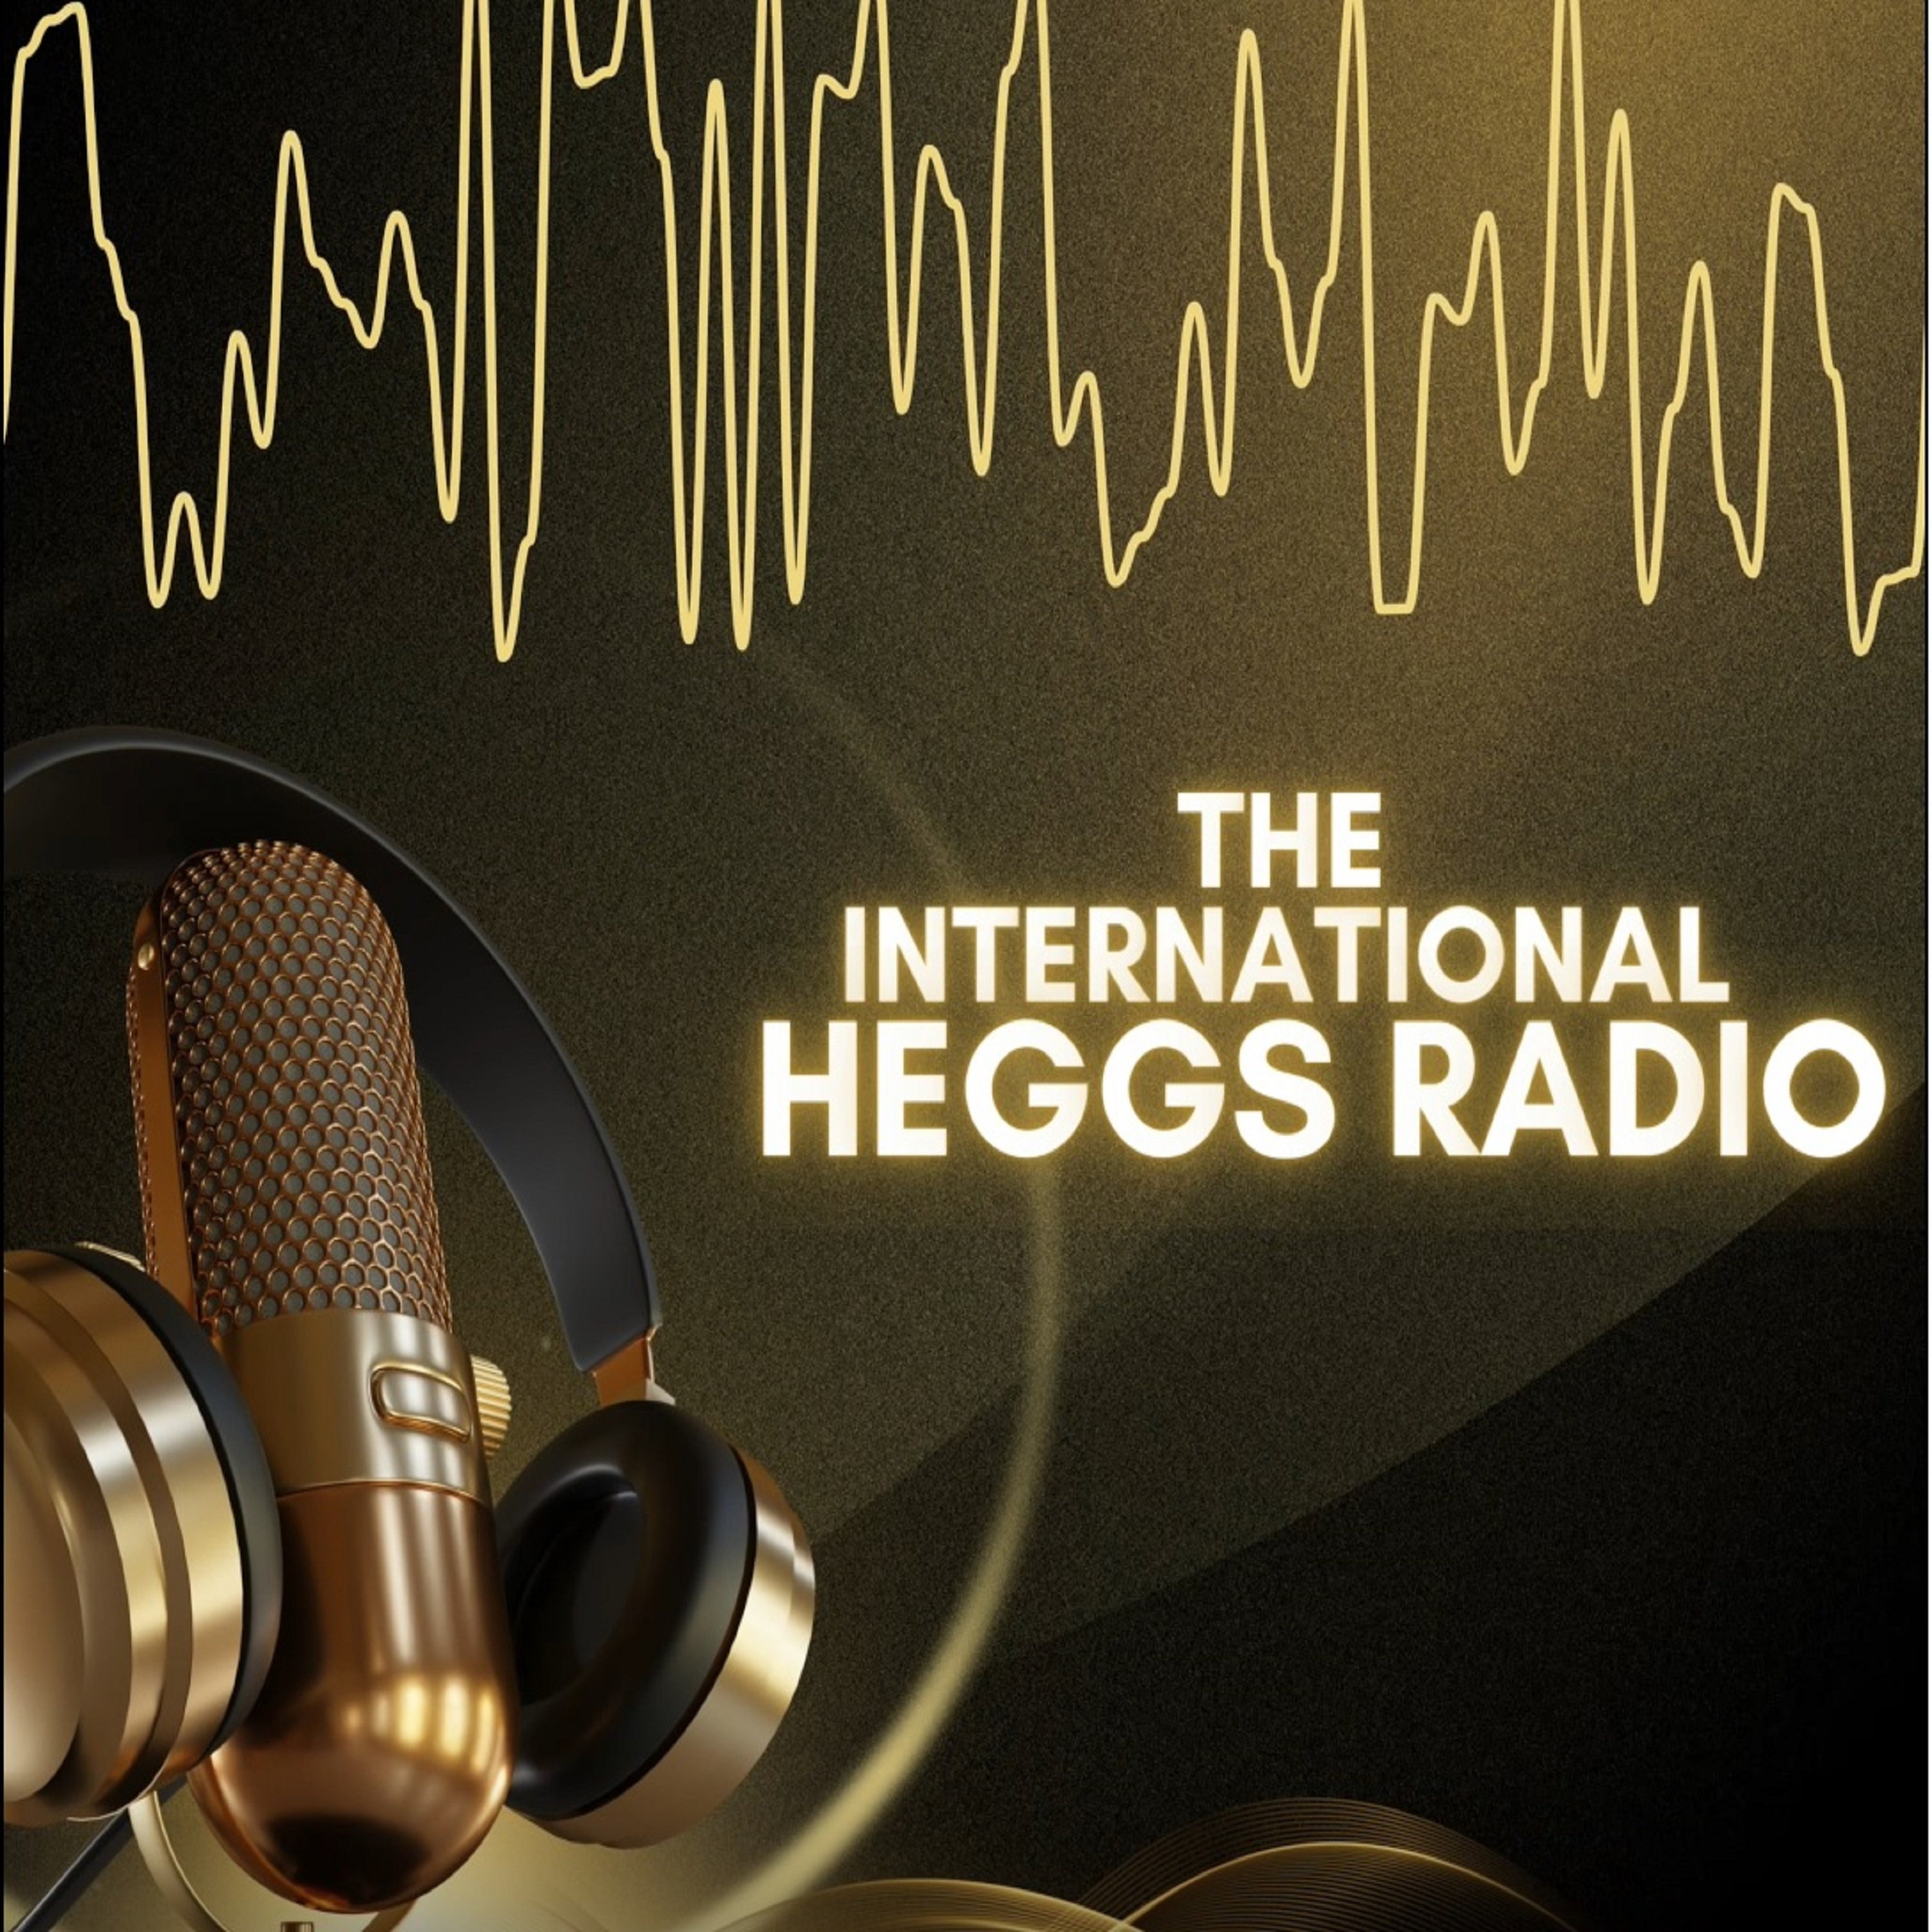 The International Heggs Radio